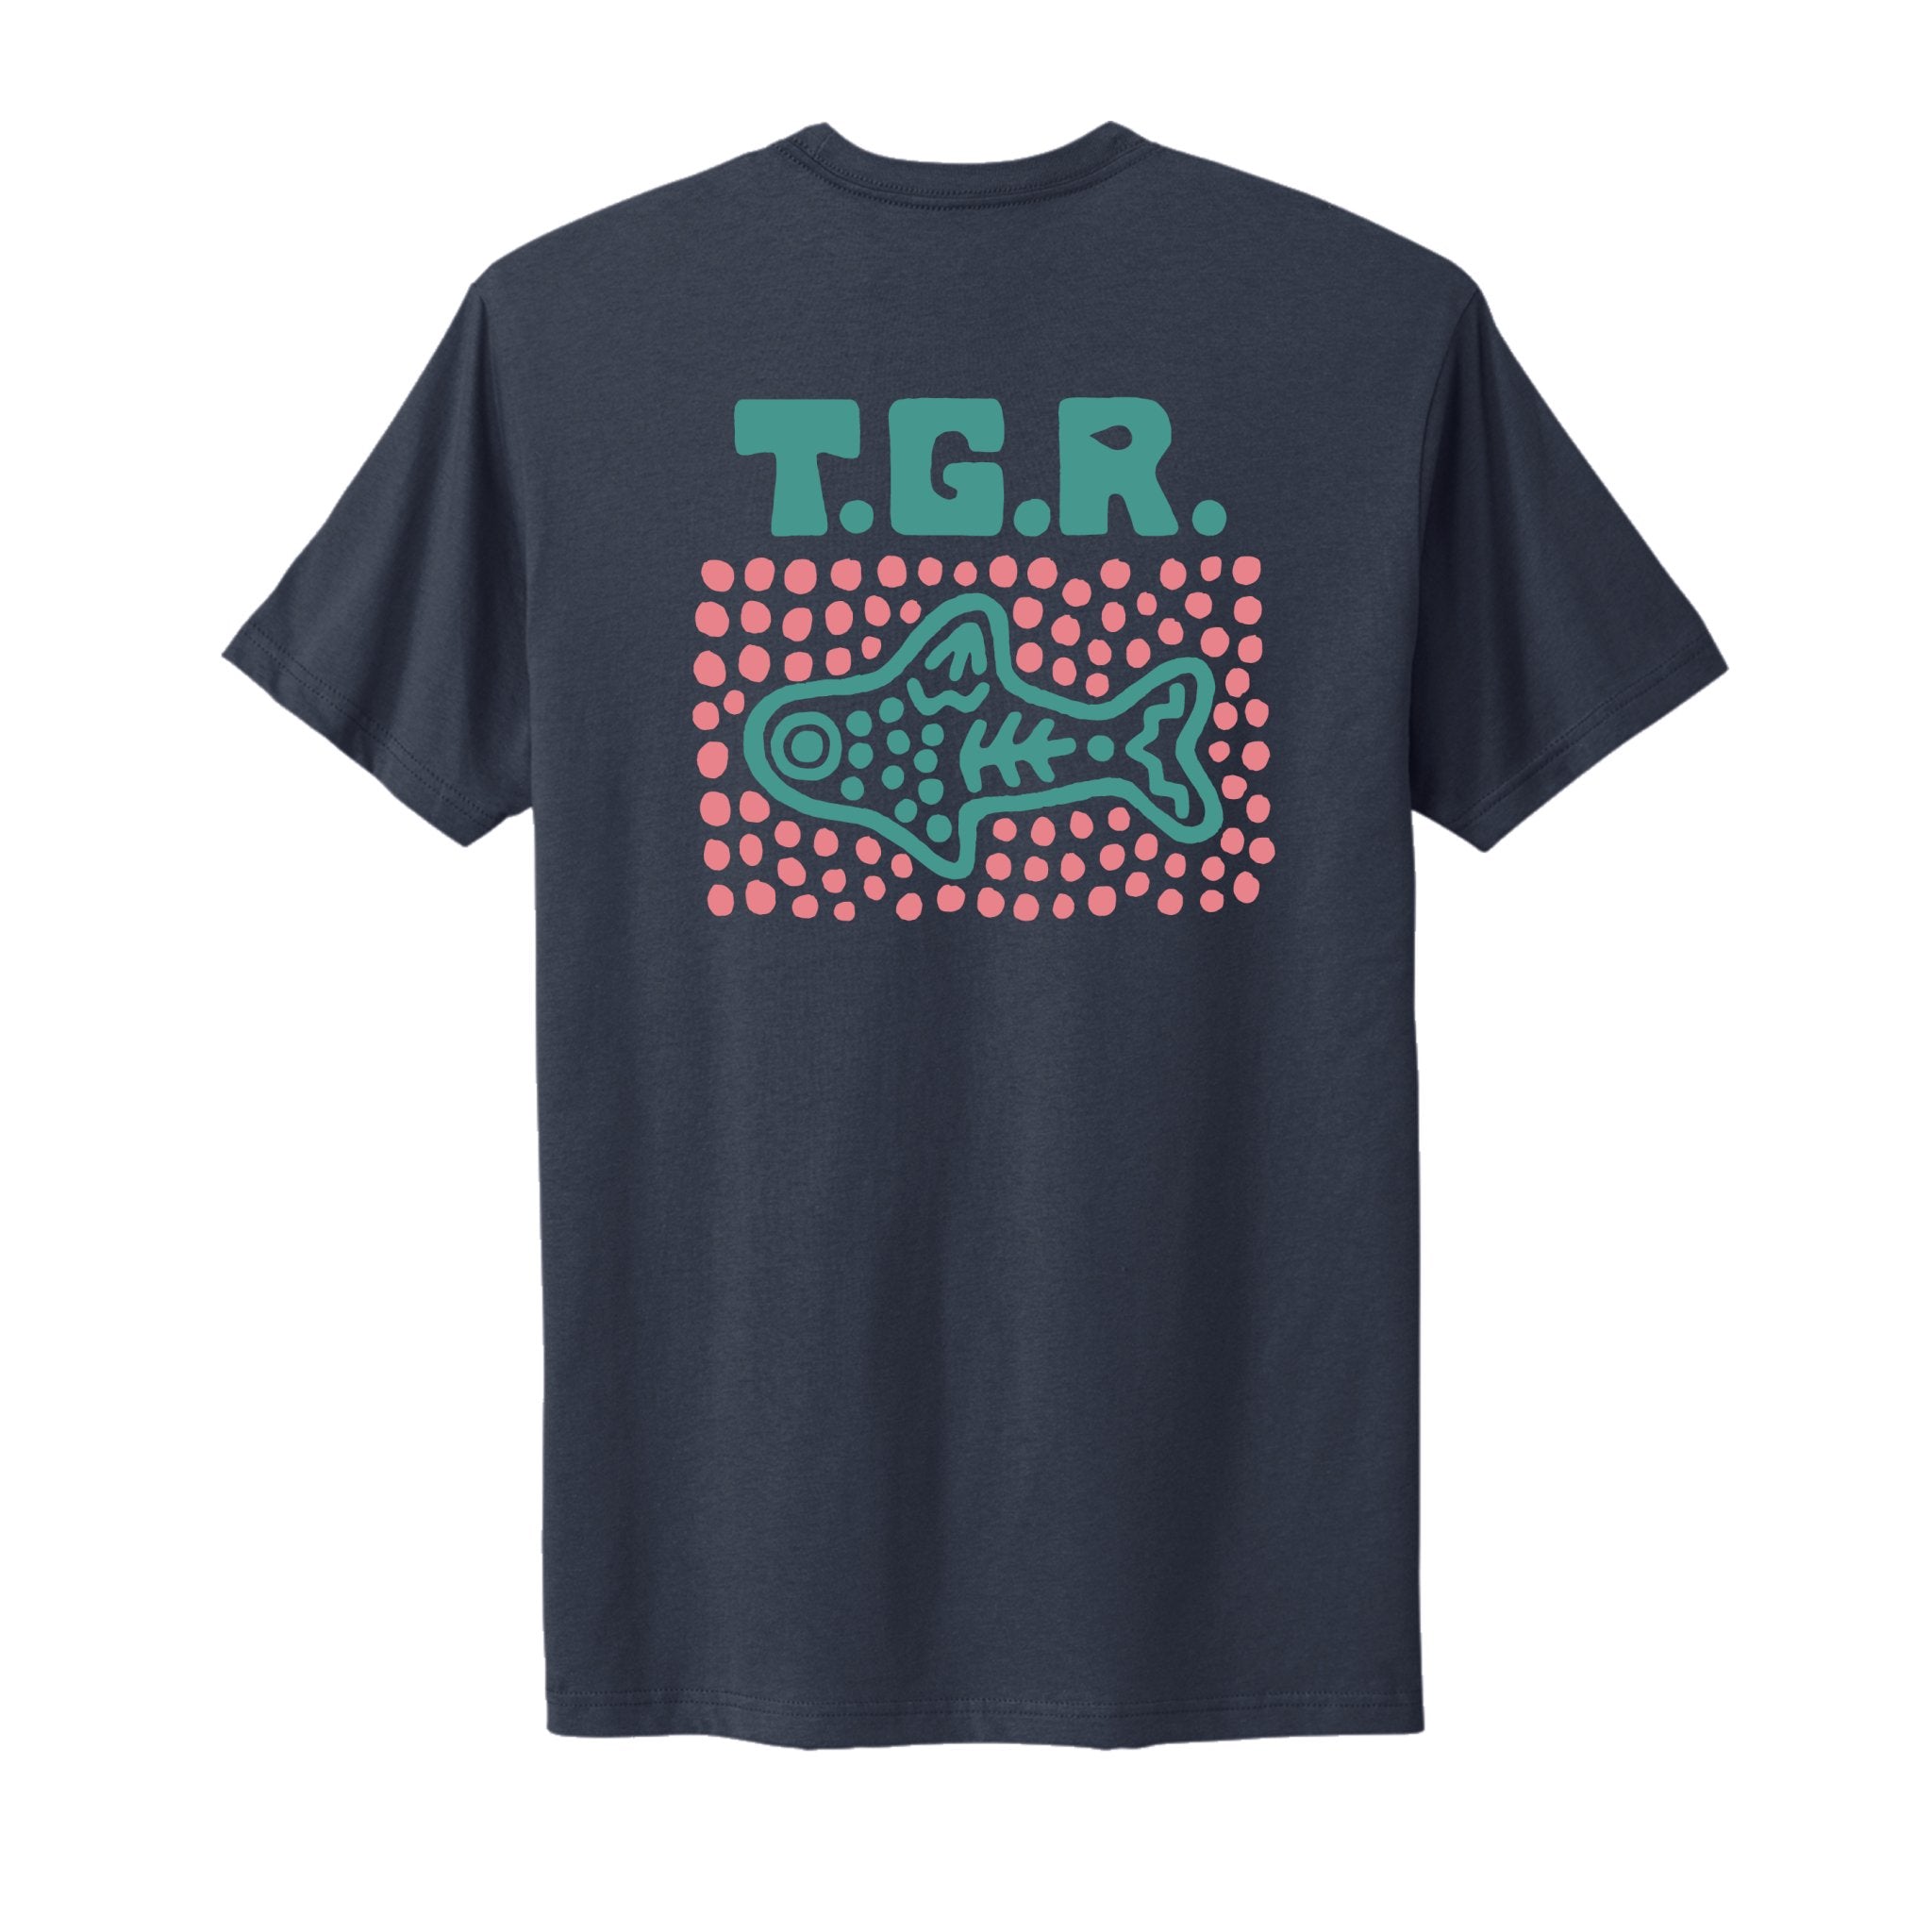 Trippy Fish Tee by Wyatt Grant - Teton Gravity Research